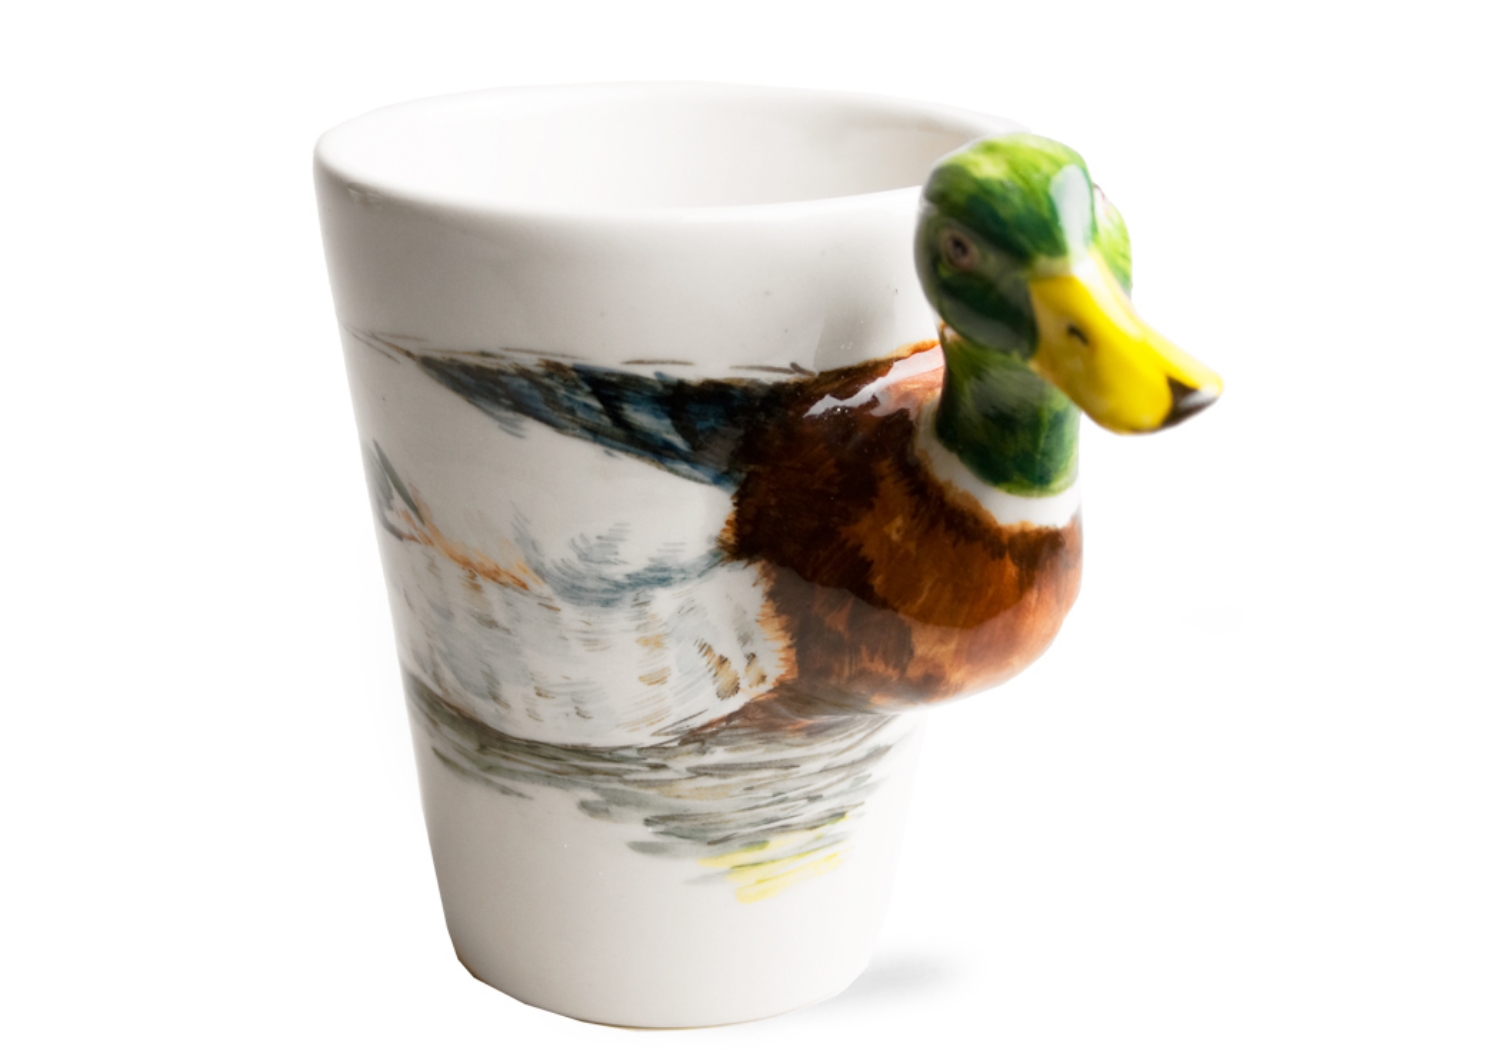 Duck Coffee Mug